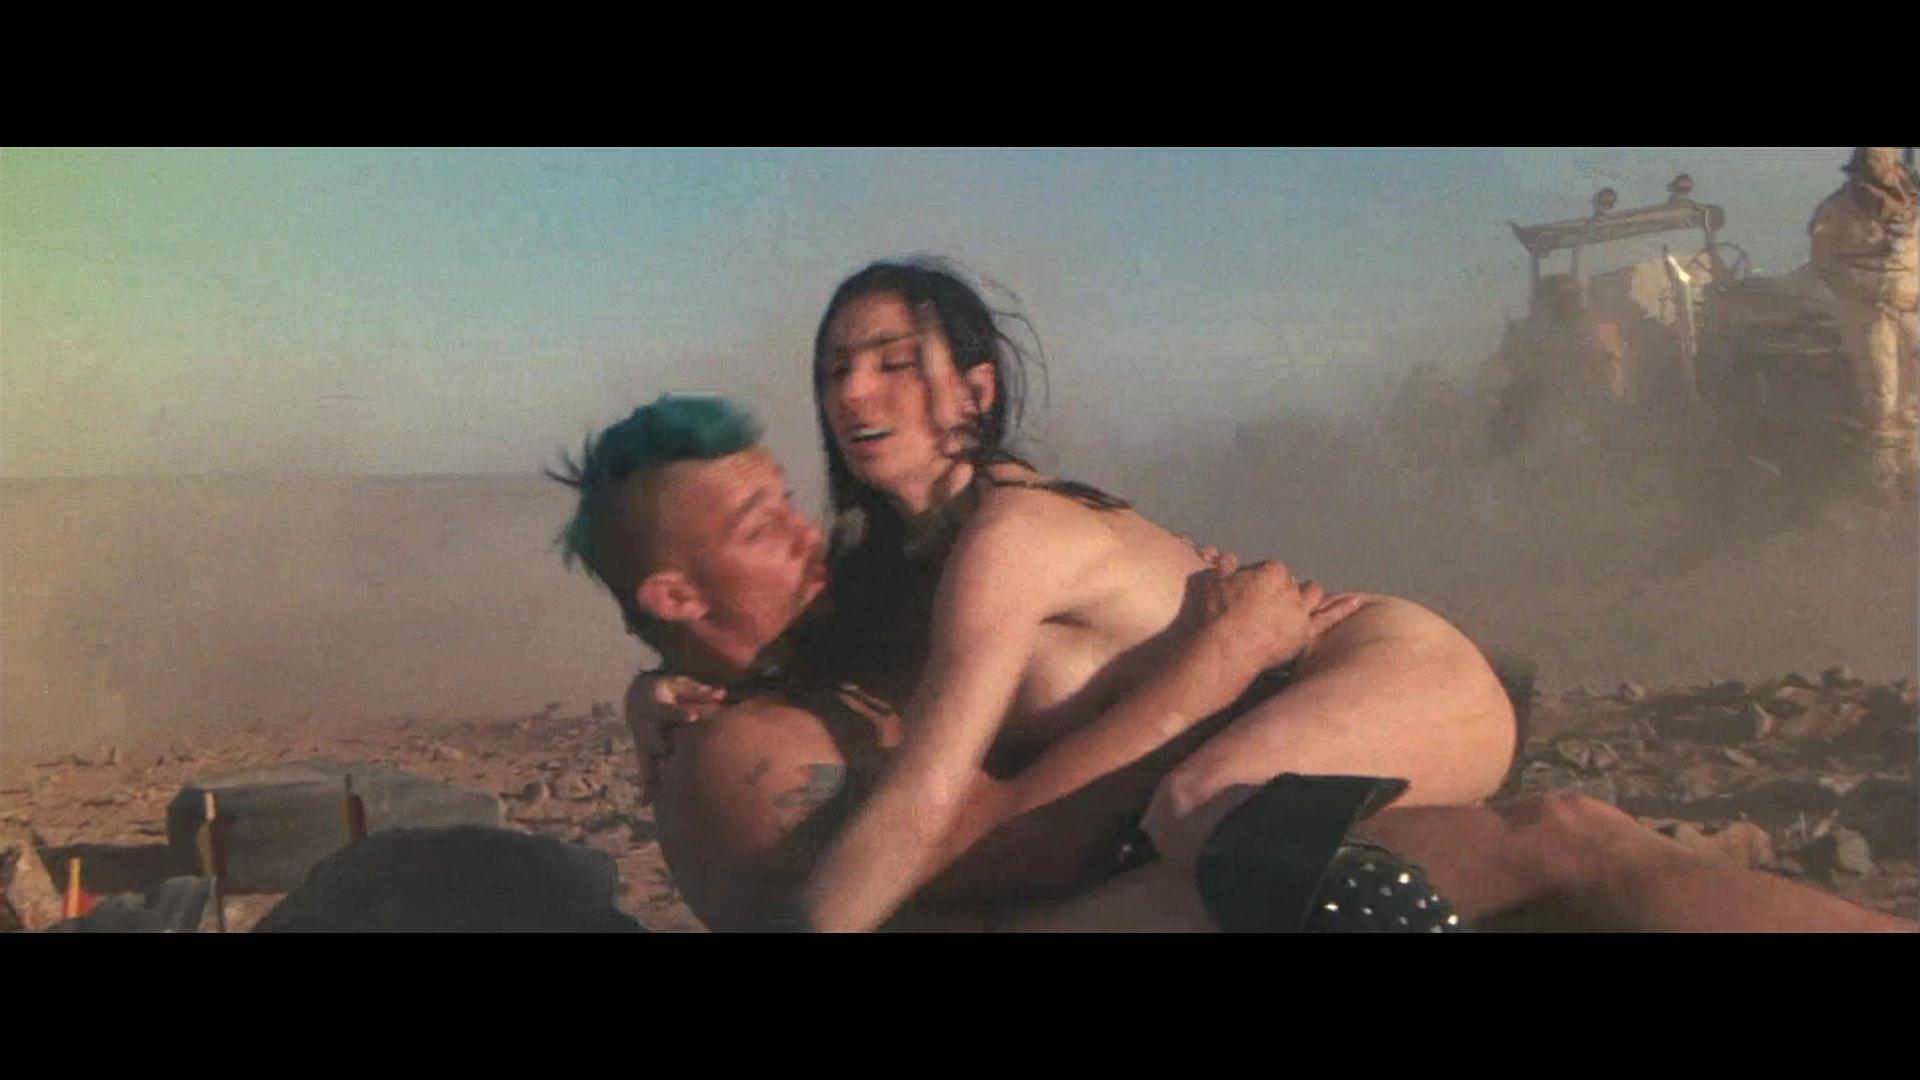 Anne Jones Nue Dans Mad Max 2 The Road Warrior